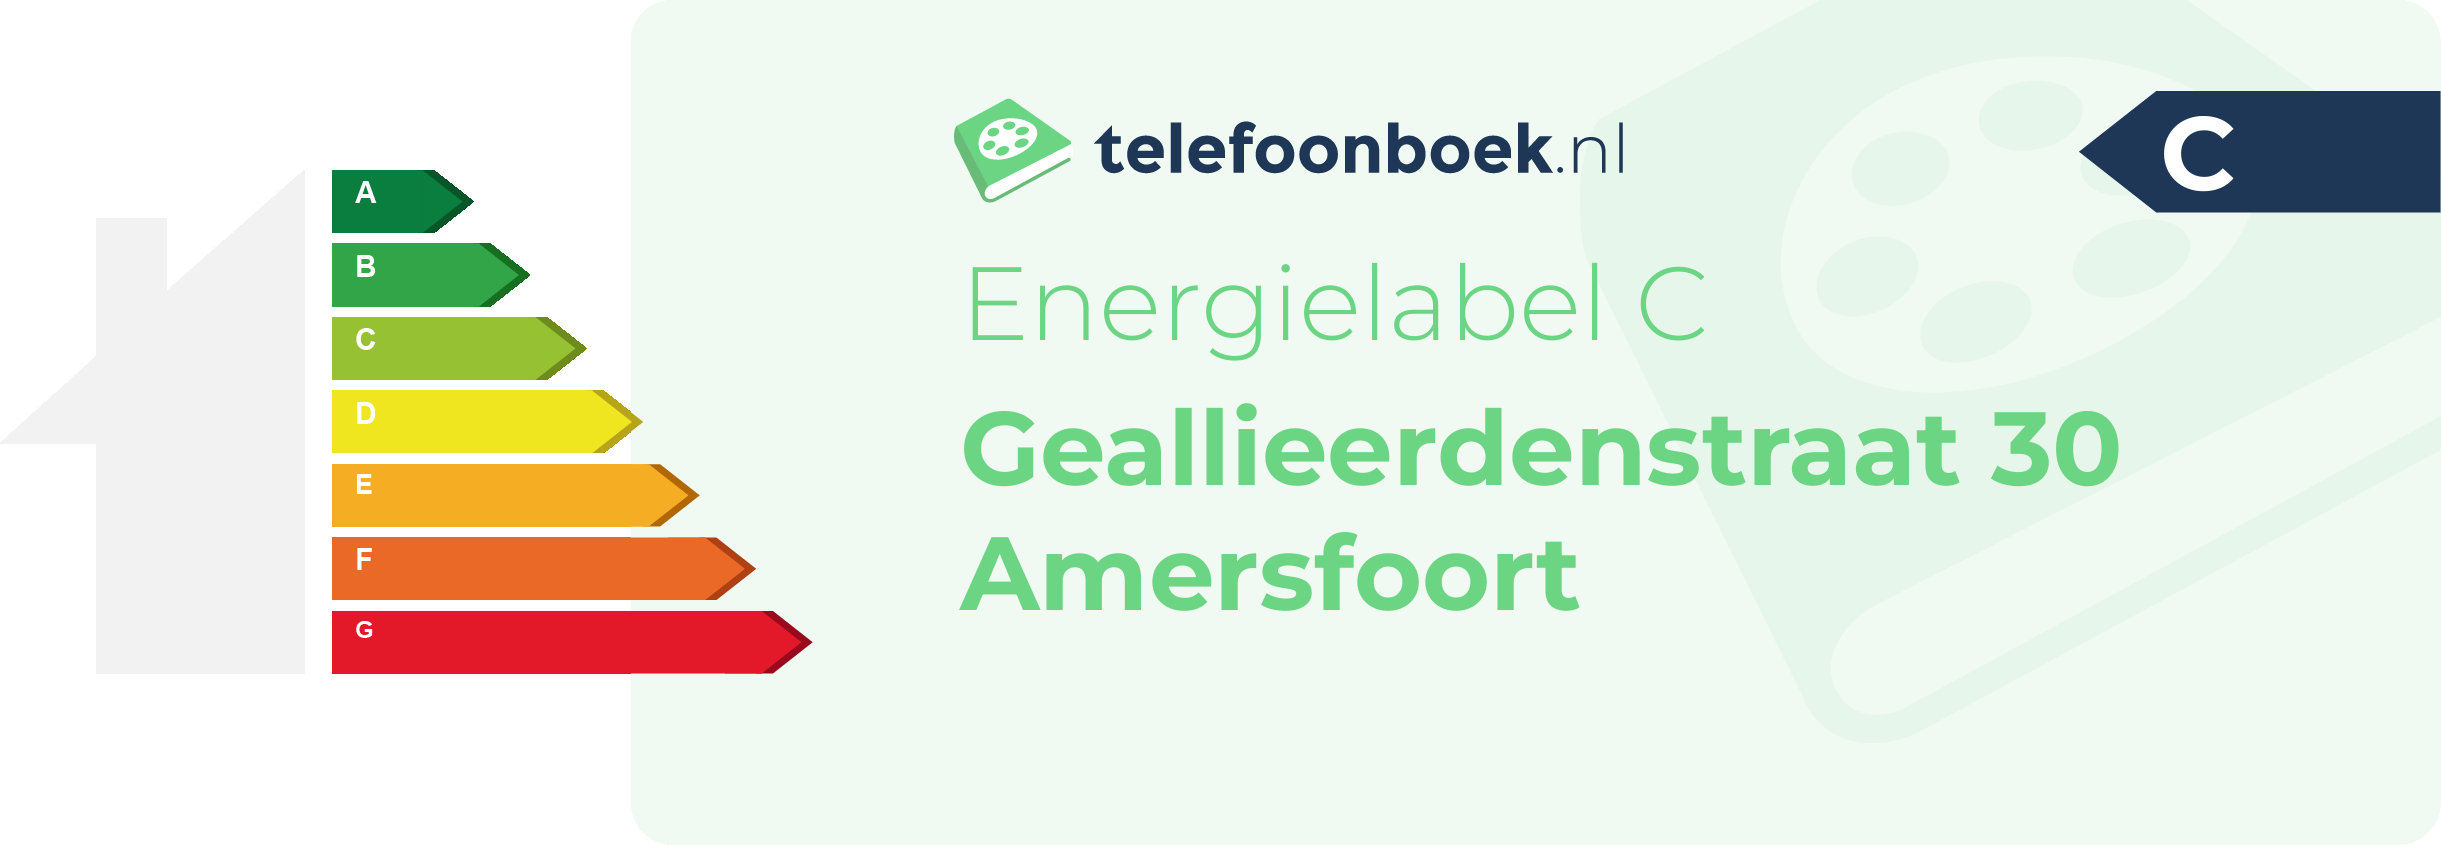 Energielabel Geallieerdenstraat 30 Amersfoort